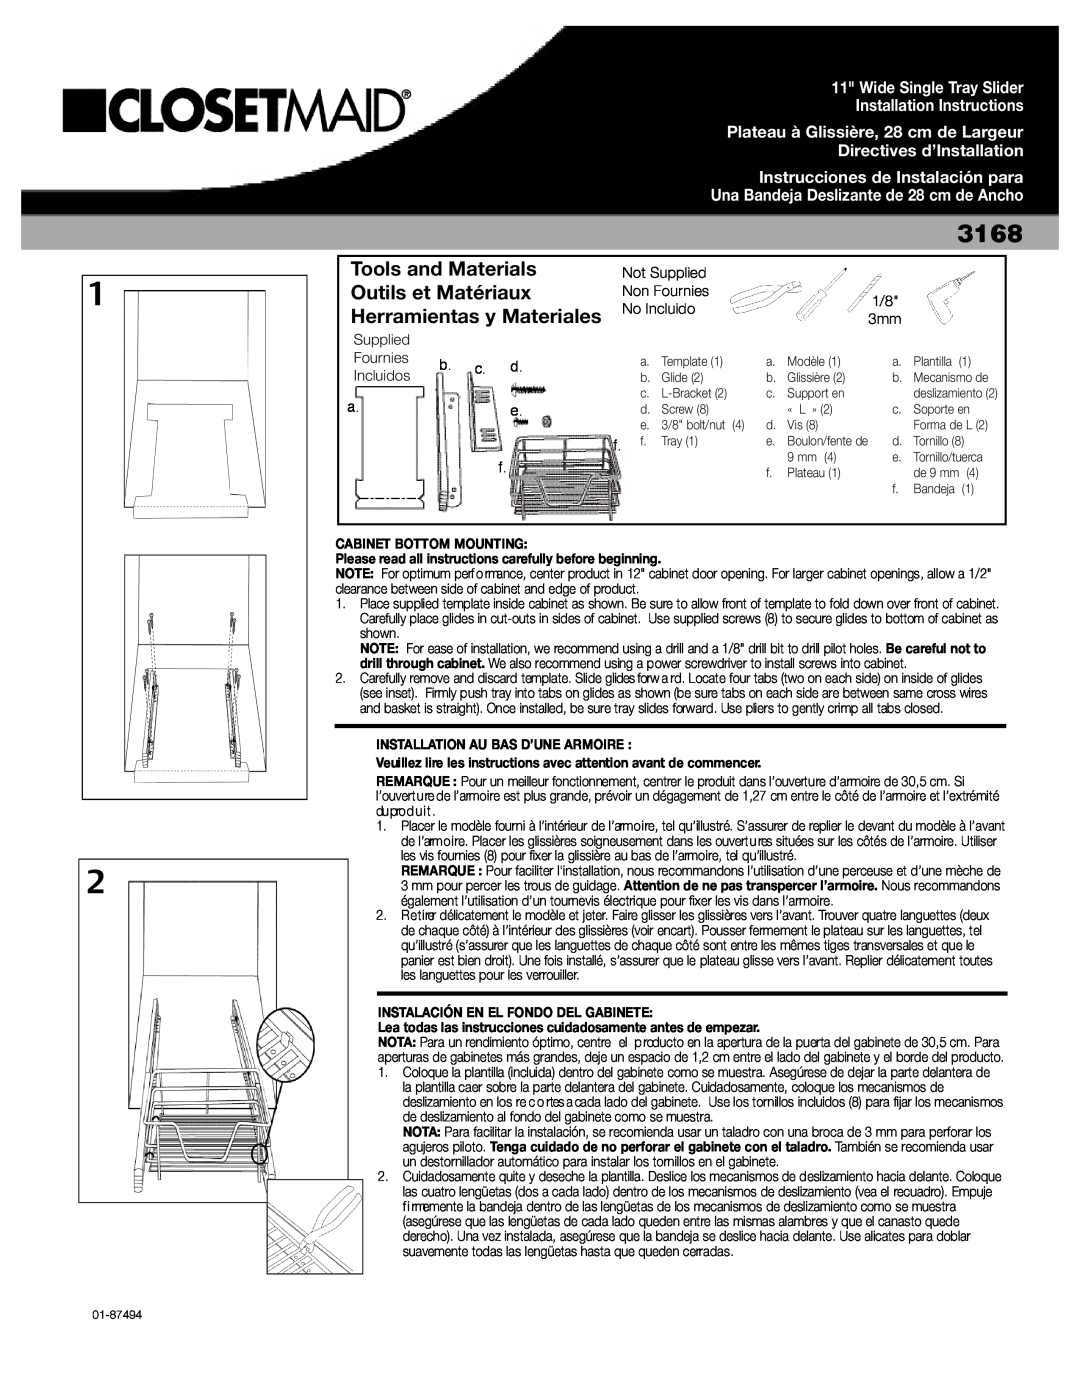 Closet Maid 3168 installation instructions Wide Single Tray Slider, Installation Instructions, Directives d’Installation 